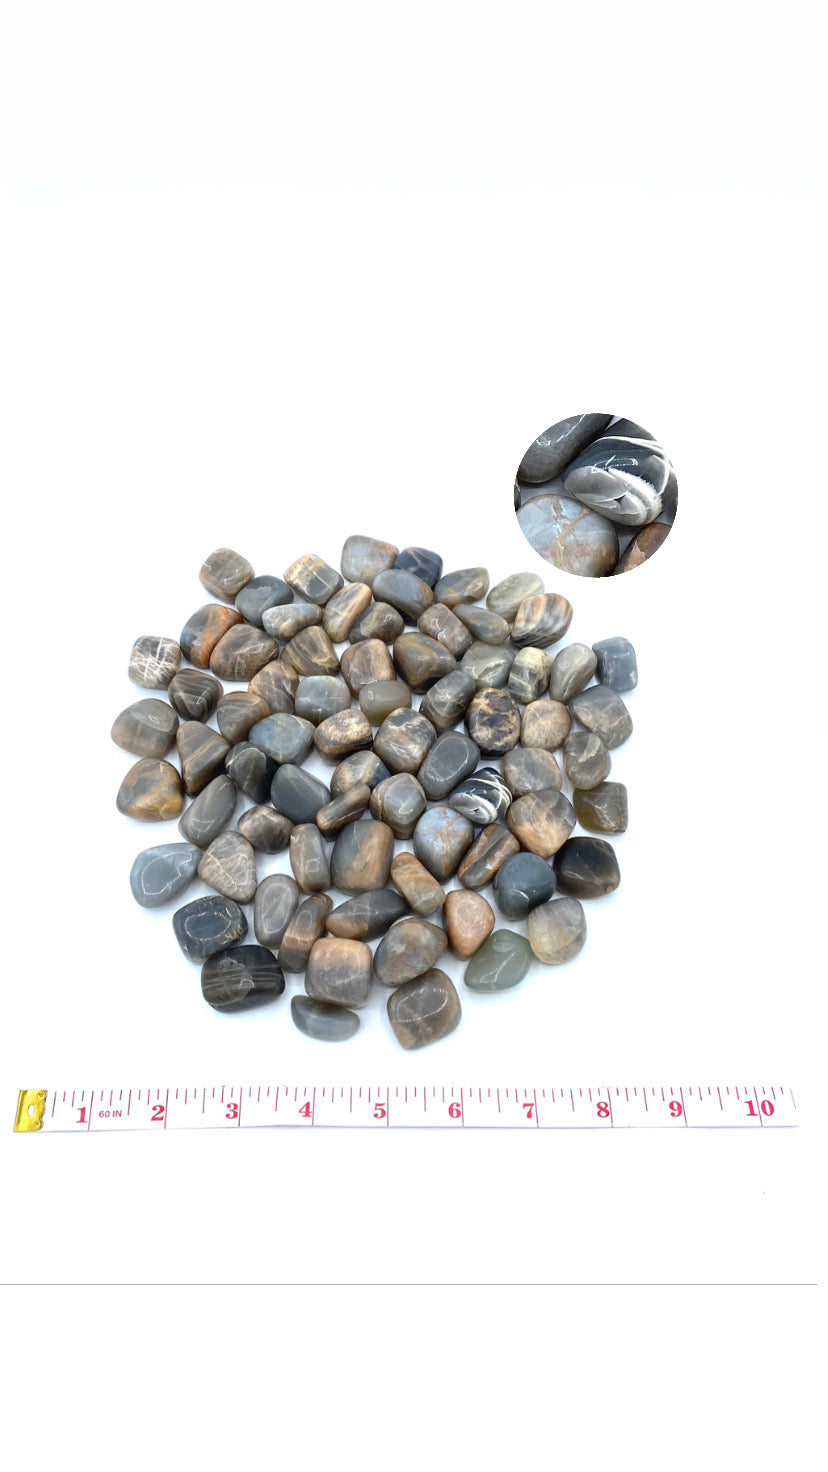 Black Moonstone Tumbled Stones | Wholesale